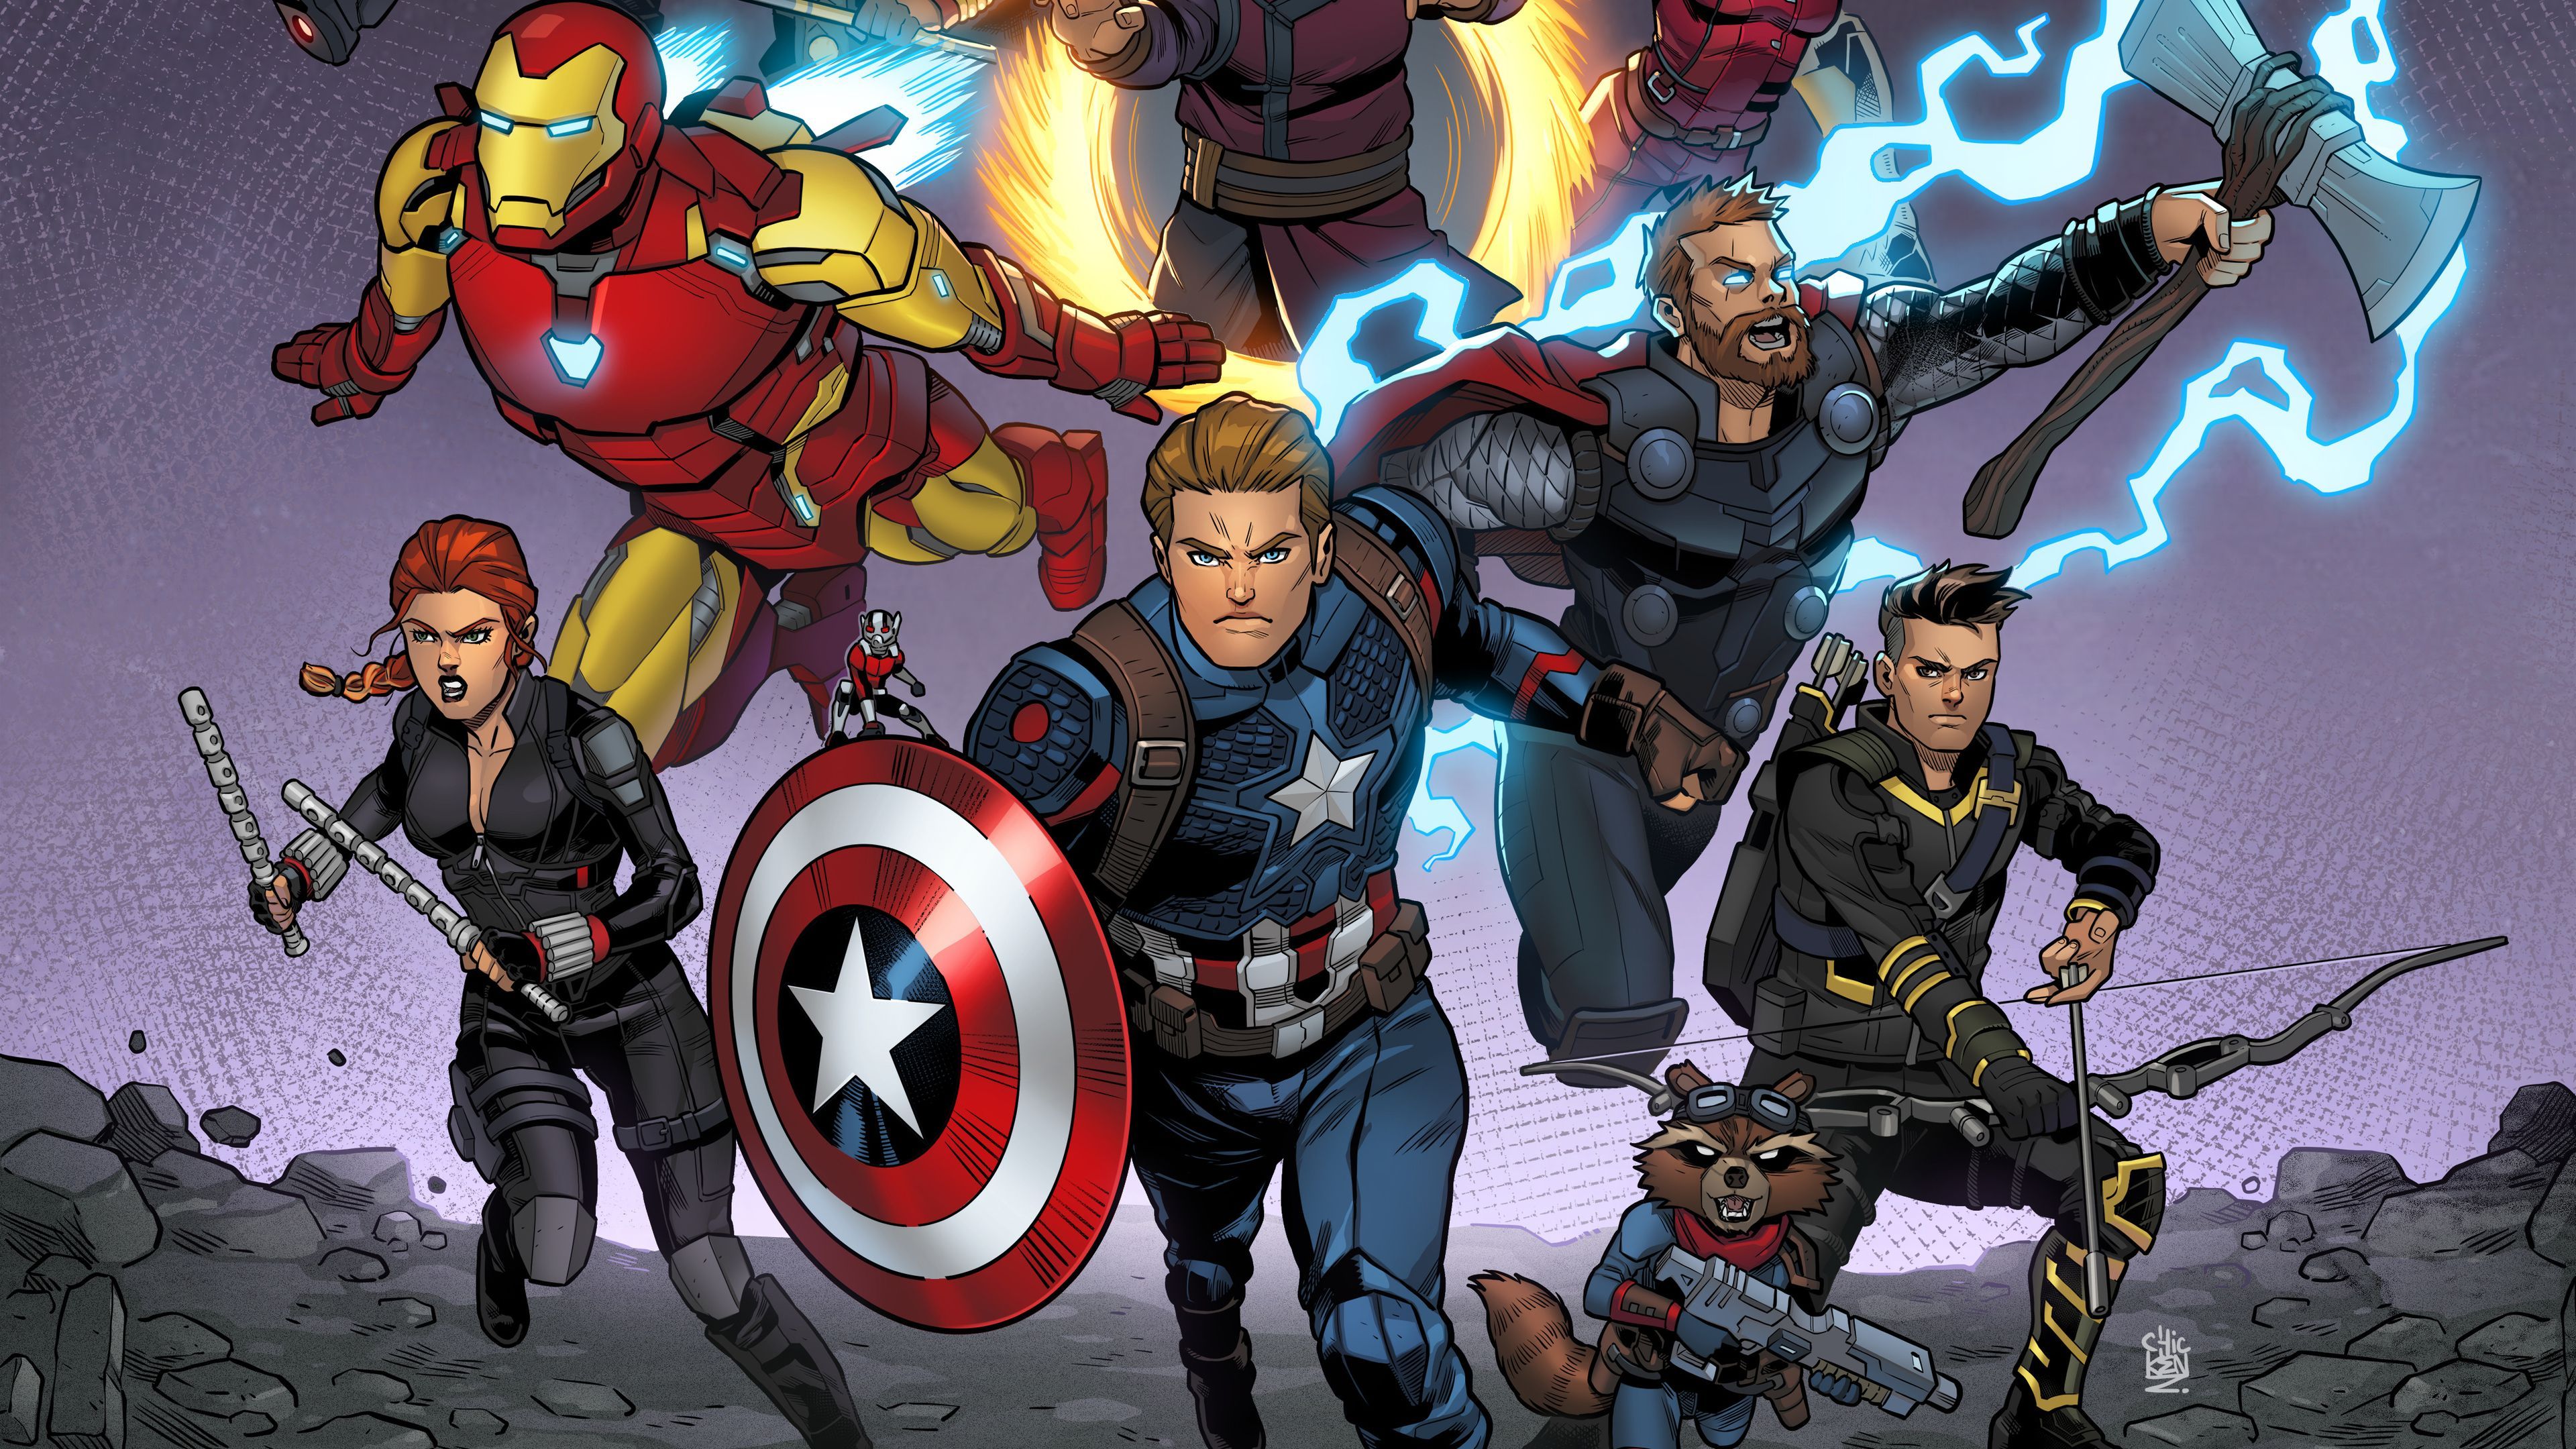 Avengers Endgame Final Fight superheroes wallpaper, movies wallpaper, hd- wallpaper, wallpaper, a. Beautiful wallpaper, Movie wallpaper, Wallpaper